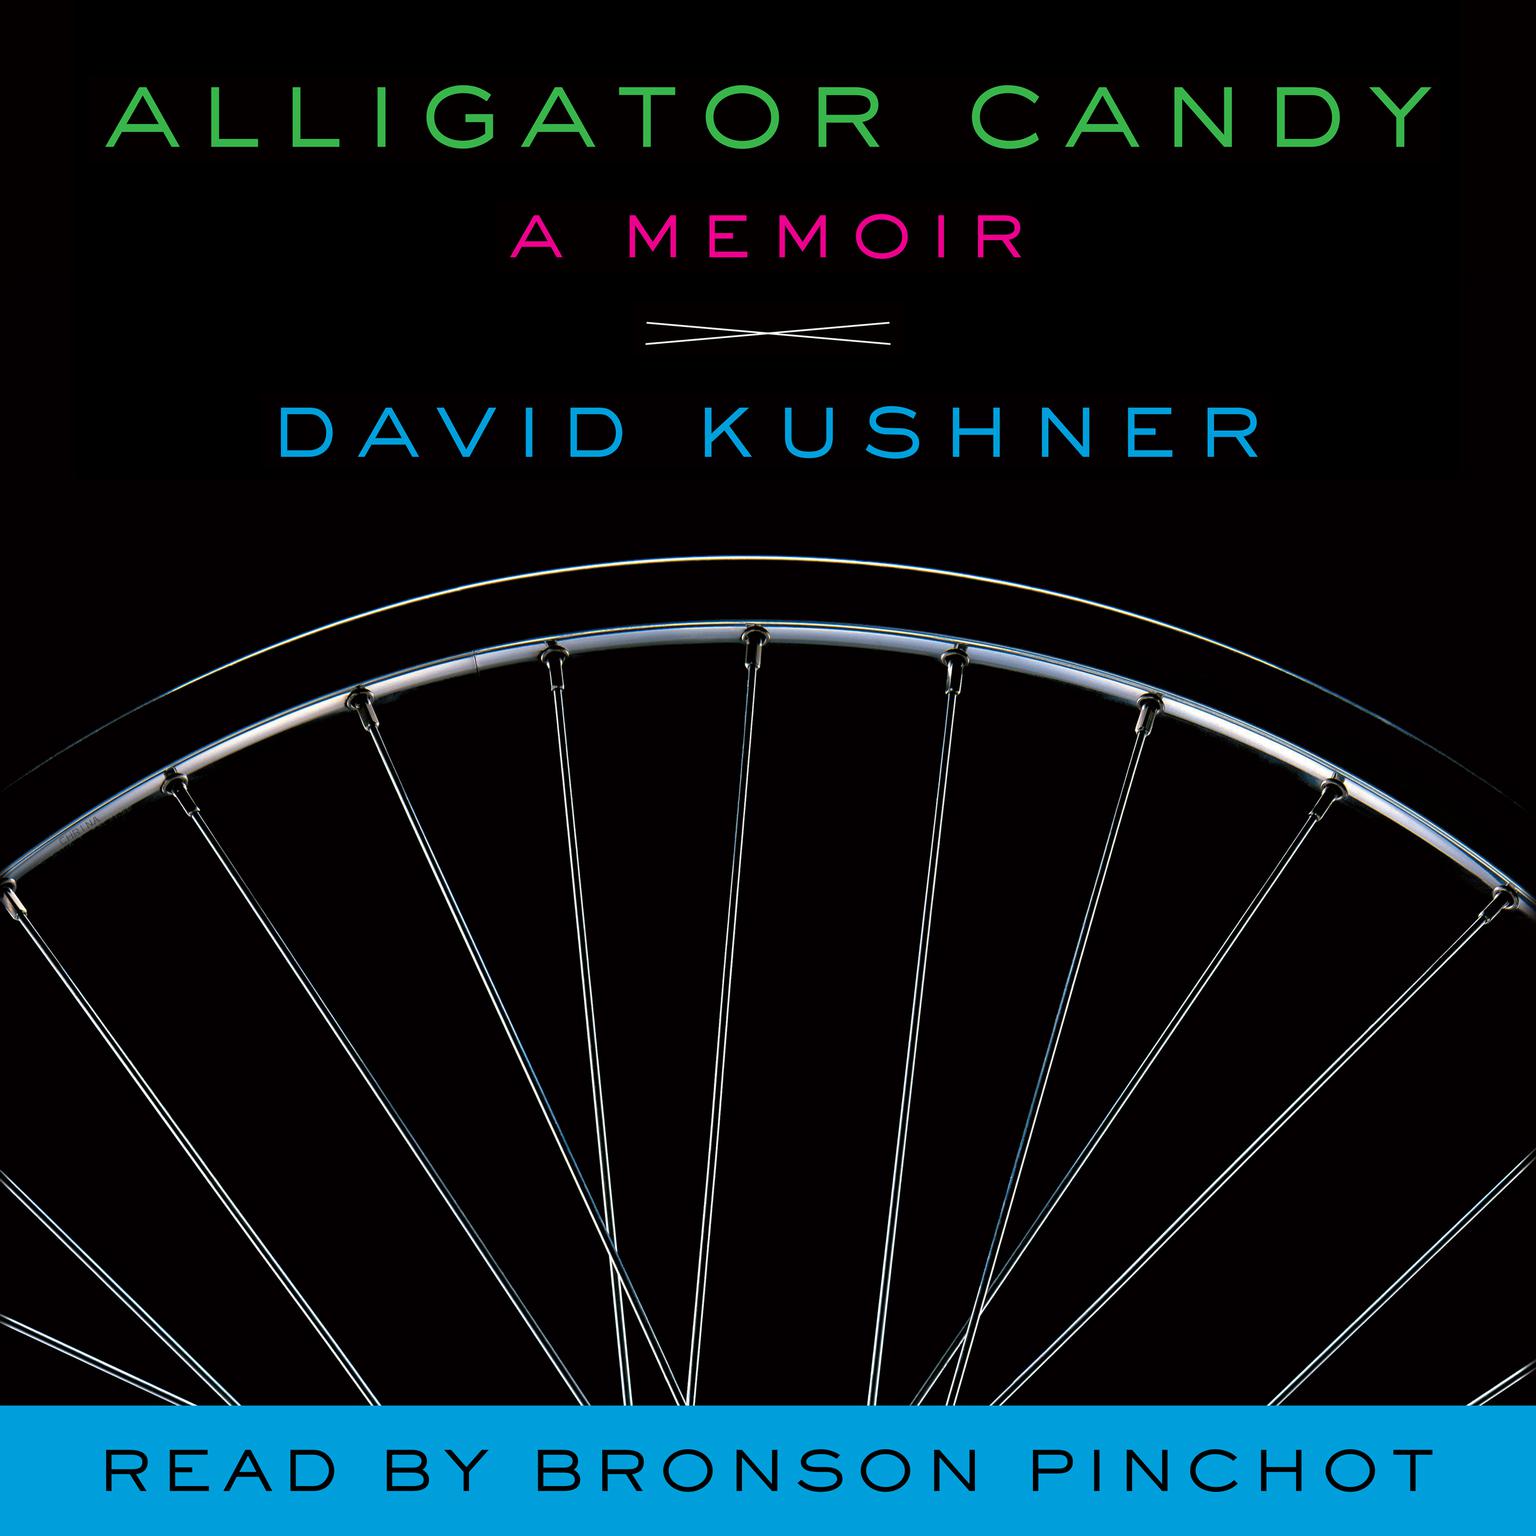 Alligator Candy: A Memoir Audiobook, by David Kushner